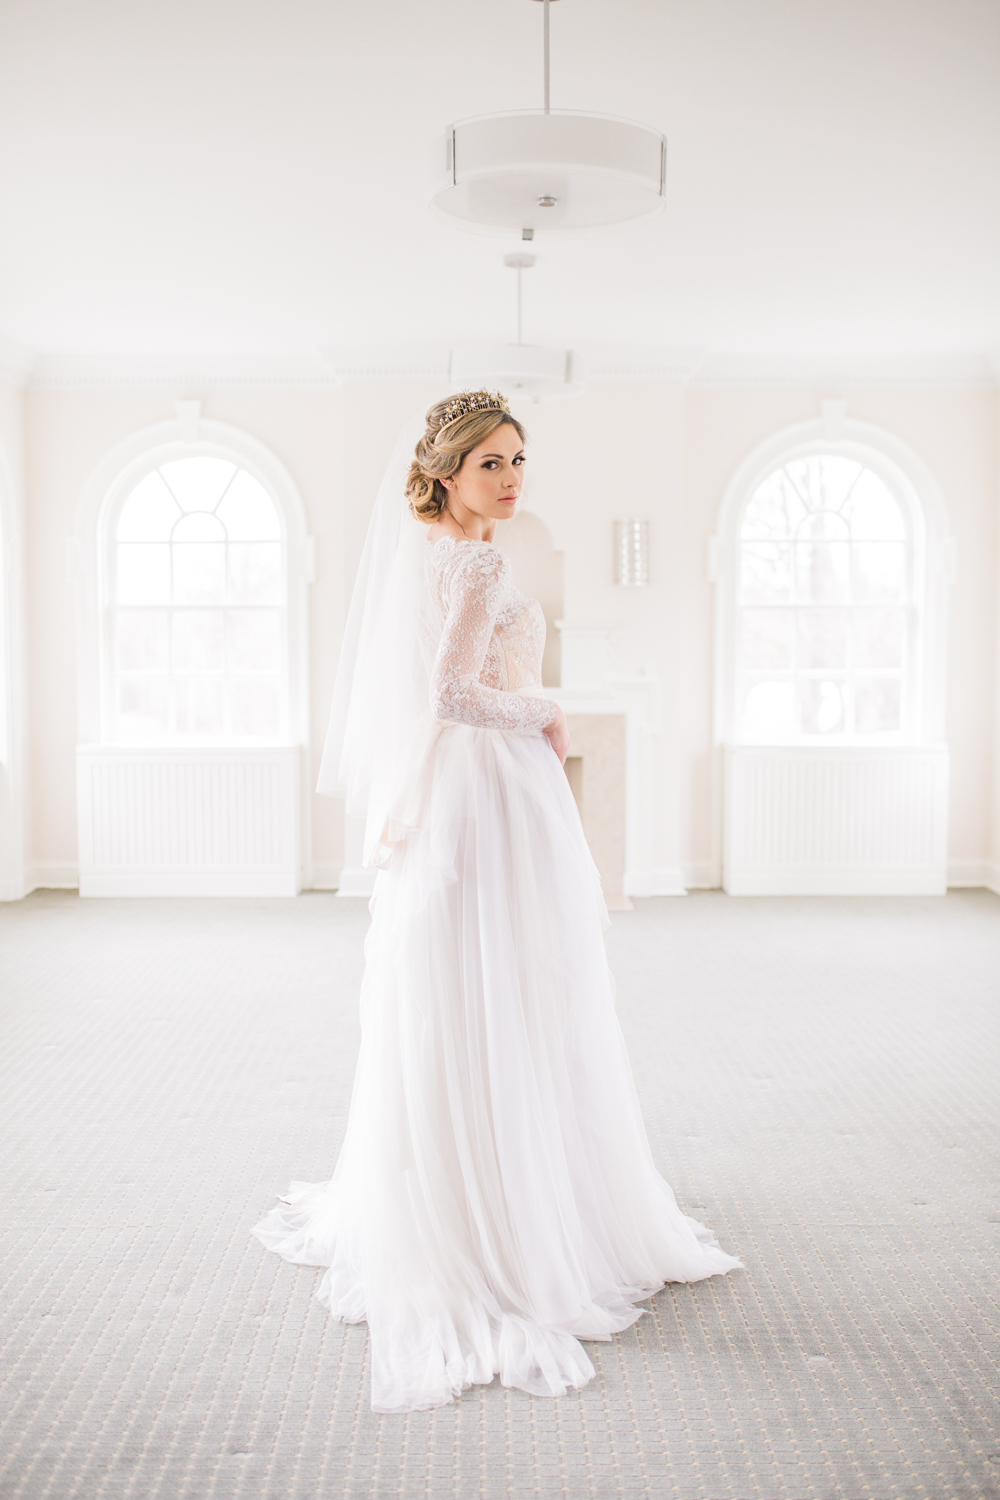 Toronto fine art film wedding photographer Muguet Photography | Estates at Sunnybrook bridals